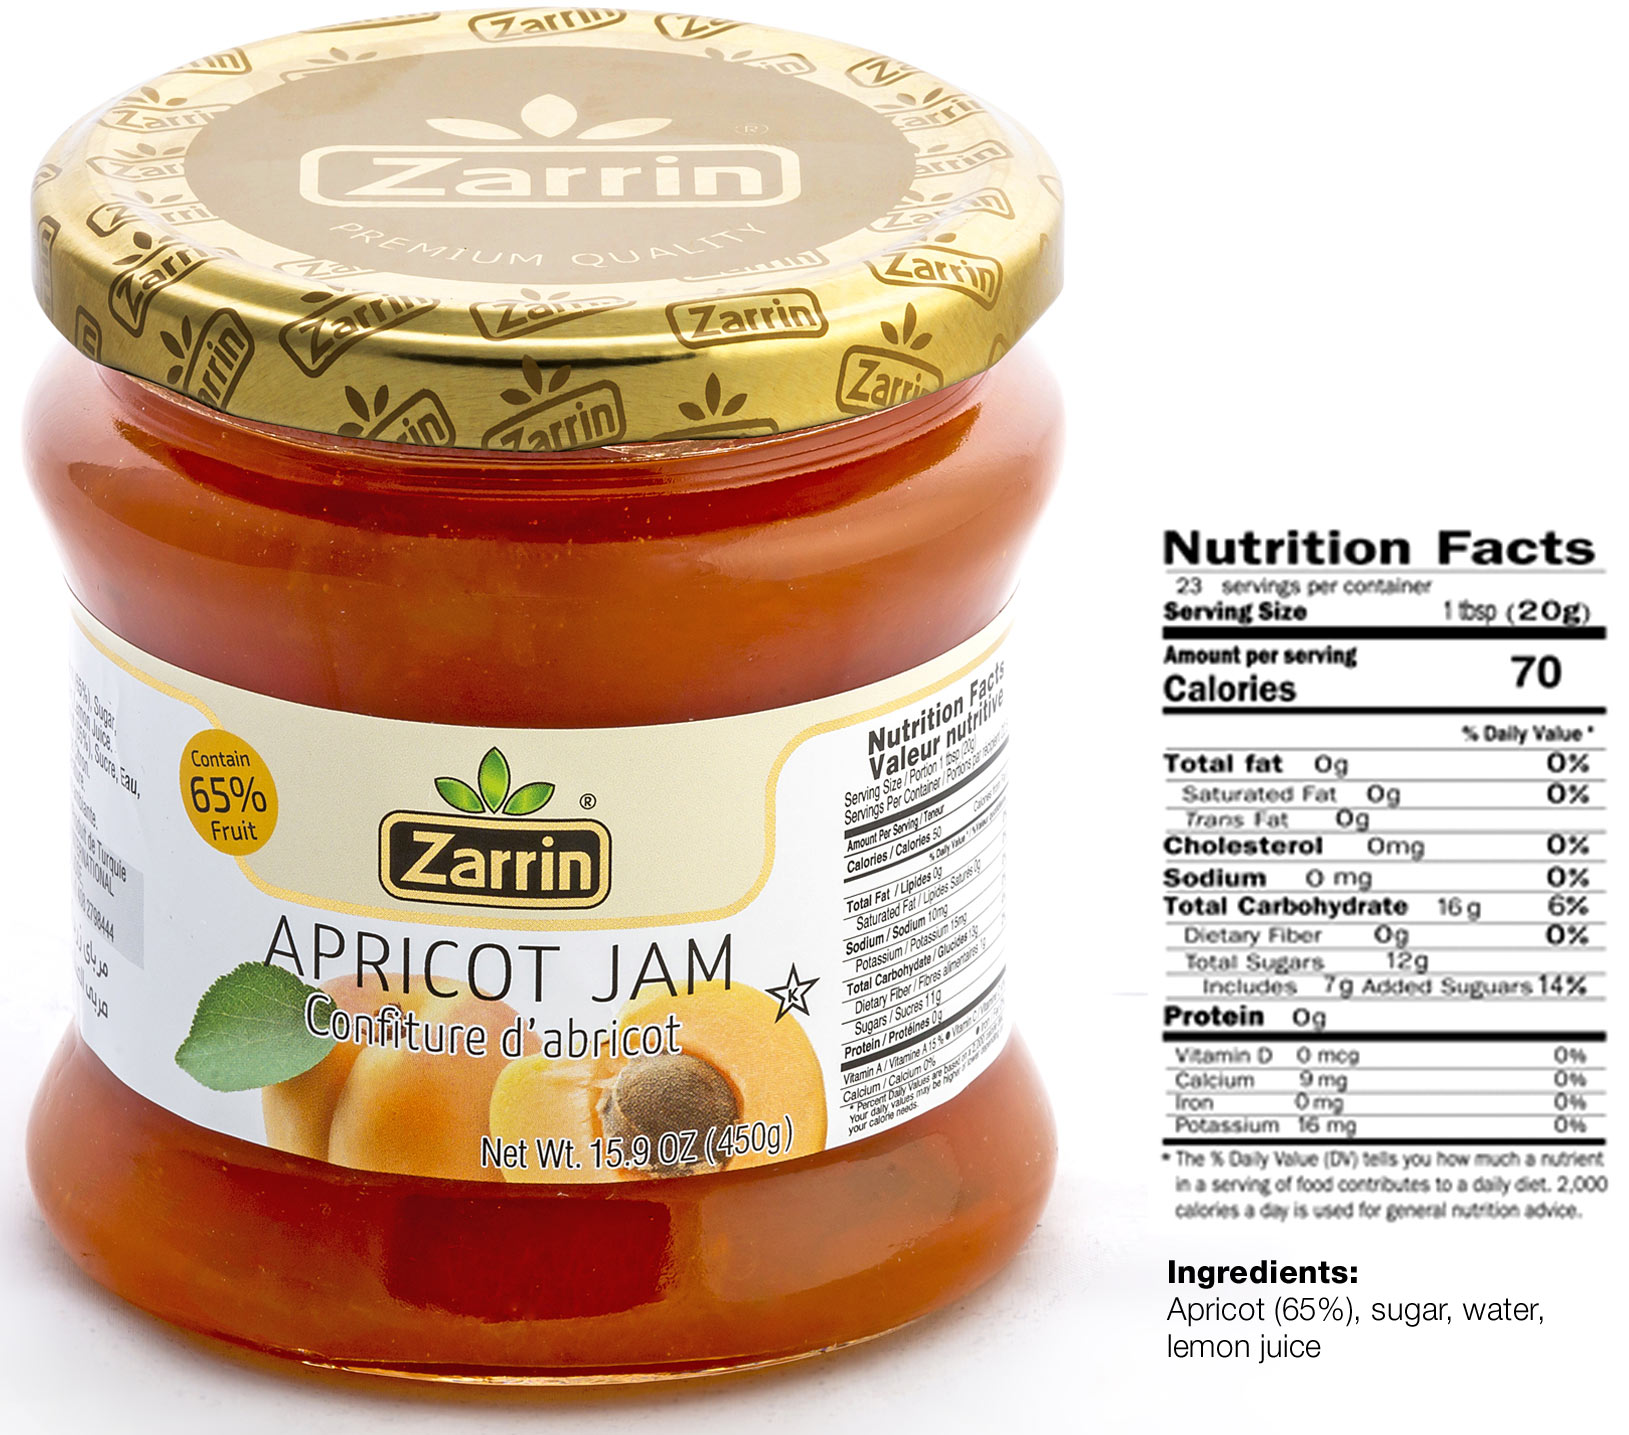 Zarrin apricot jam in 15.9 oz glass jar.